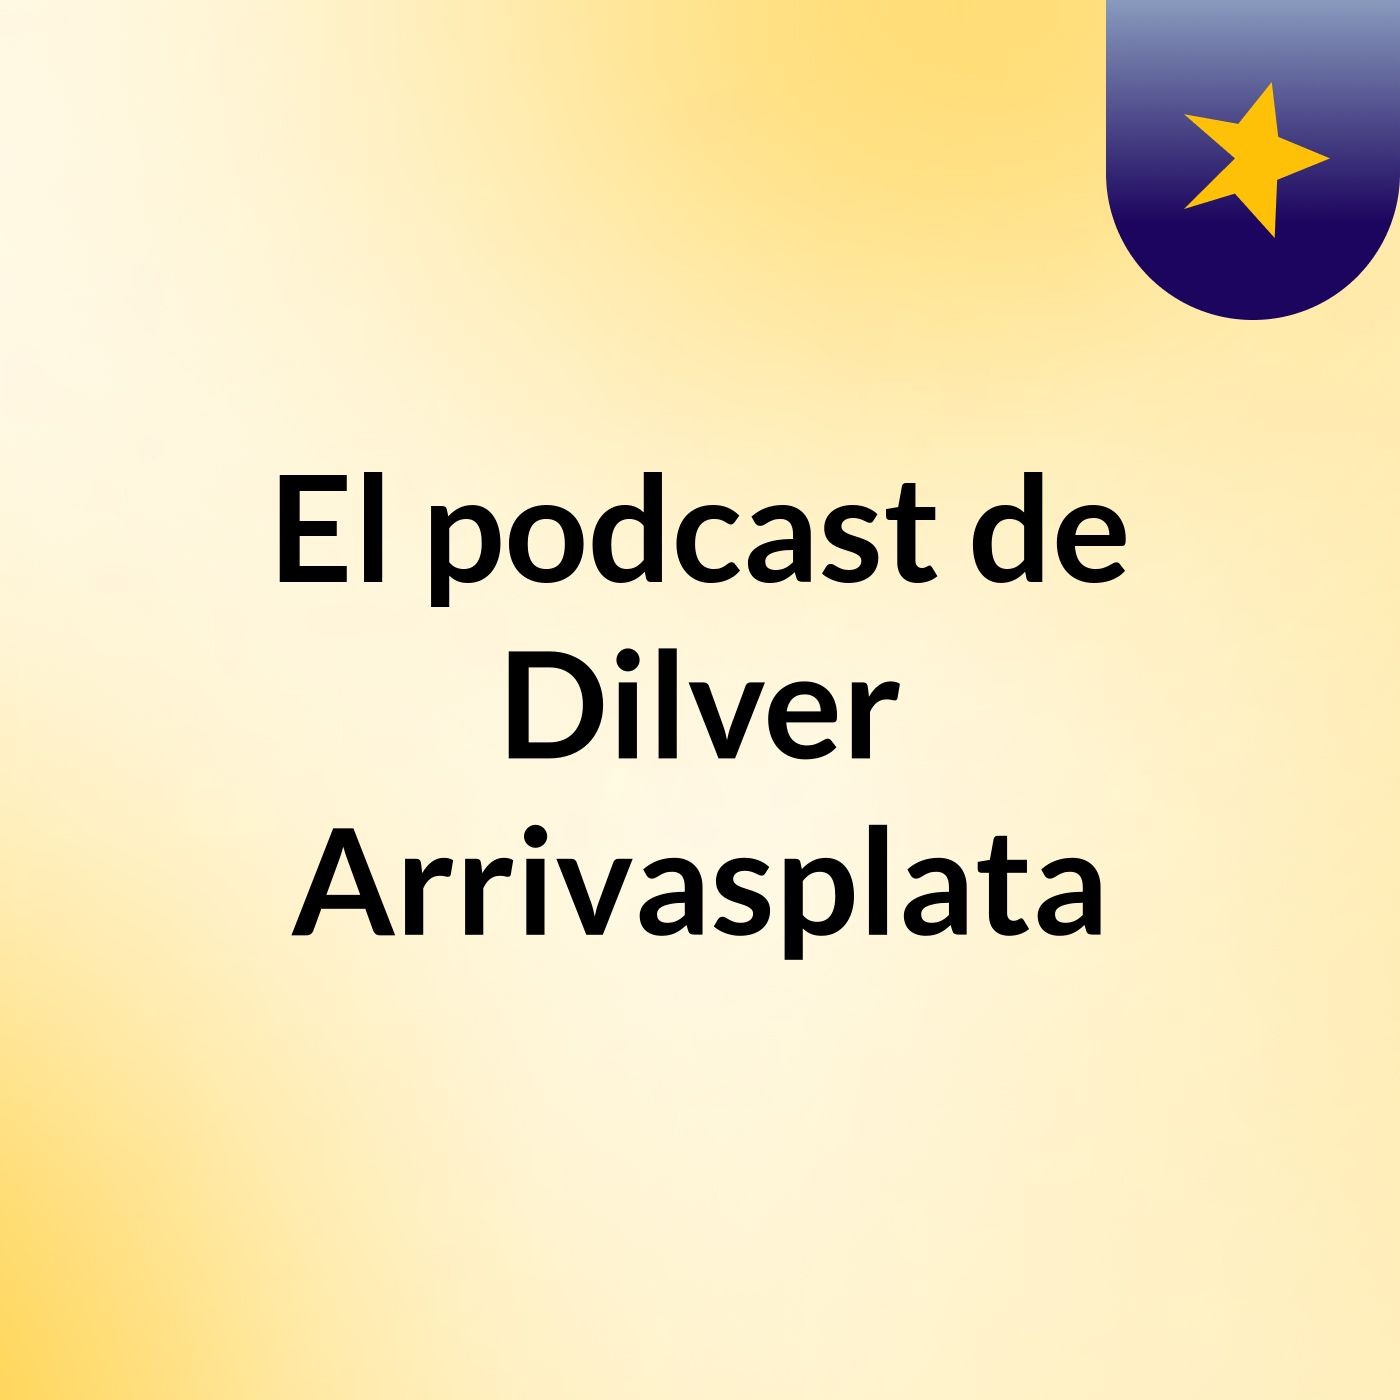 Episodio 2 - El podcast de Dilver Arrivasplata